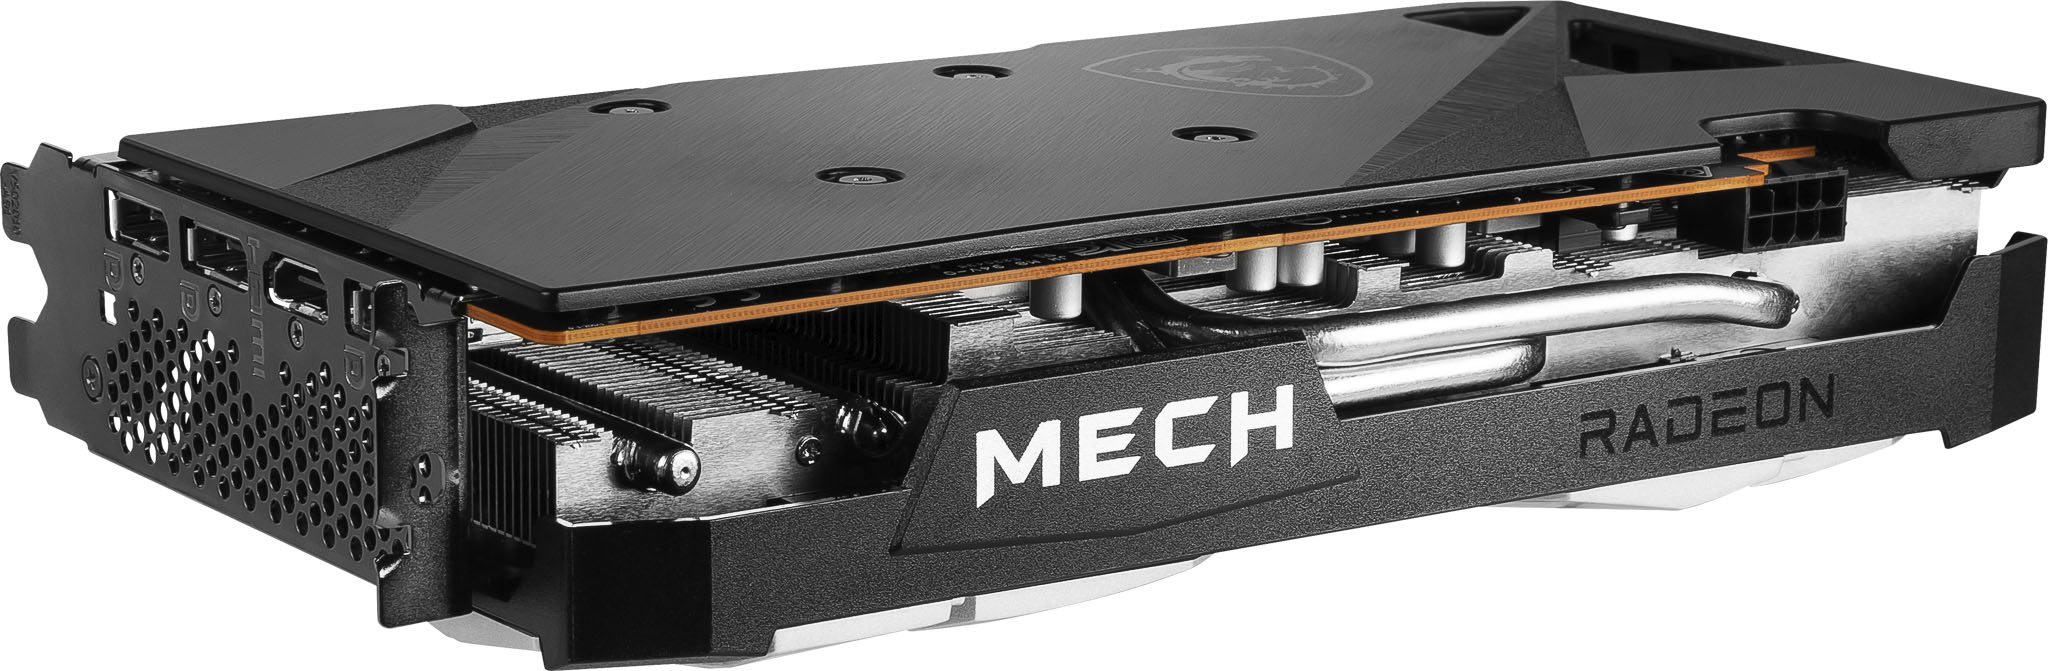 Customer Reviews: MSI AMD Radeon RX 6600 XT MECH 2X 8G OC GDDR6 PCI